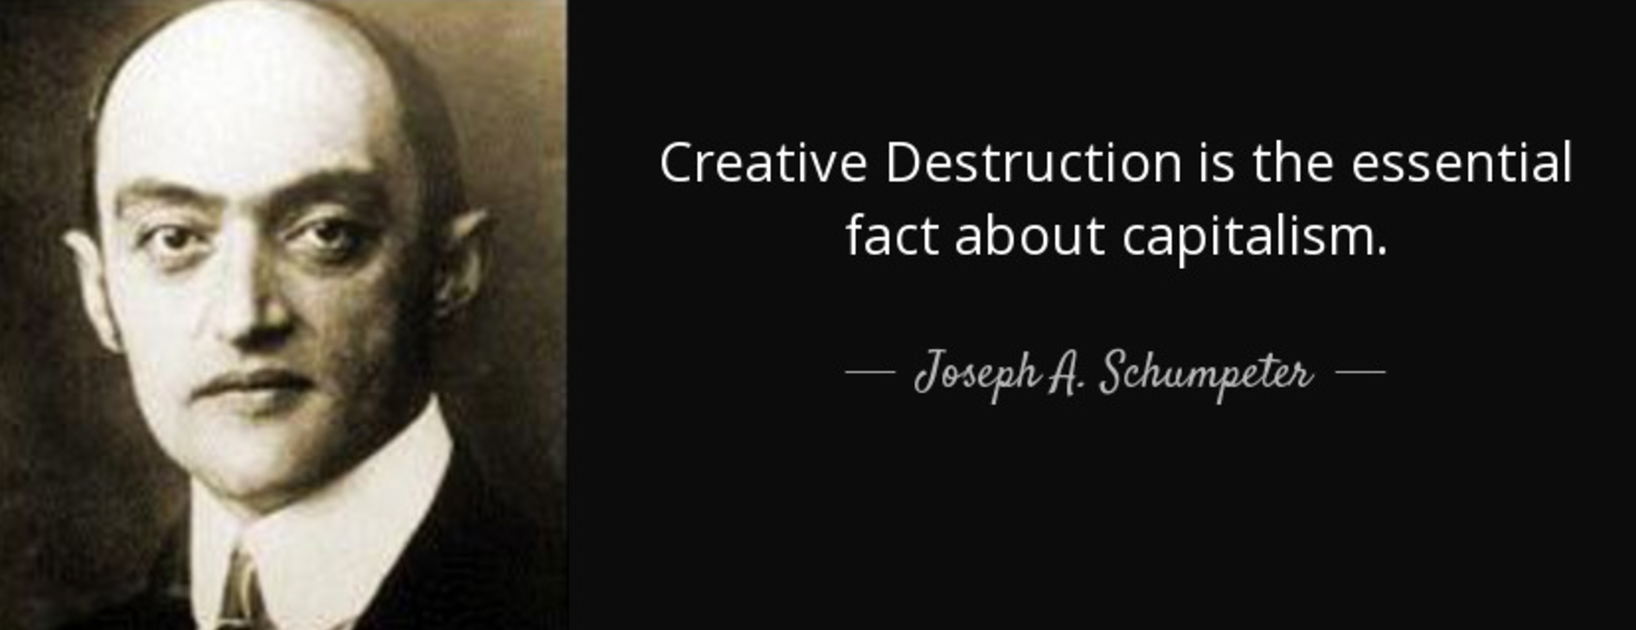 Creative Destruction Quote Schumpeter “Creative Destruction is the essential fact about capitalism”